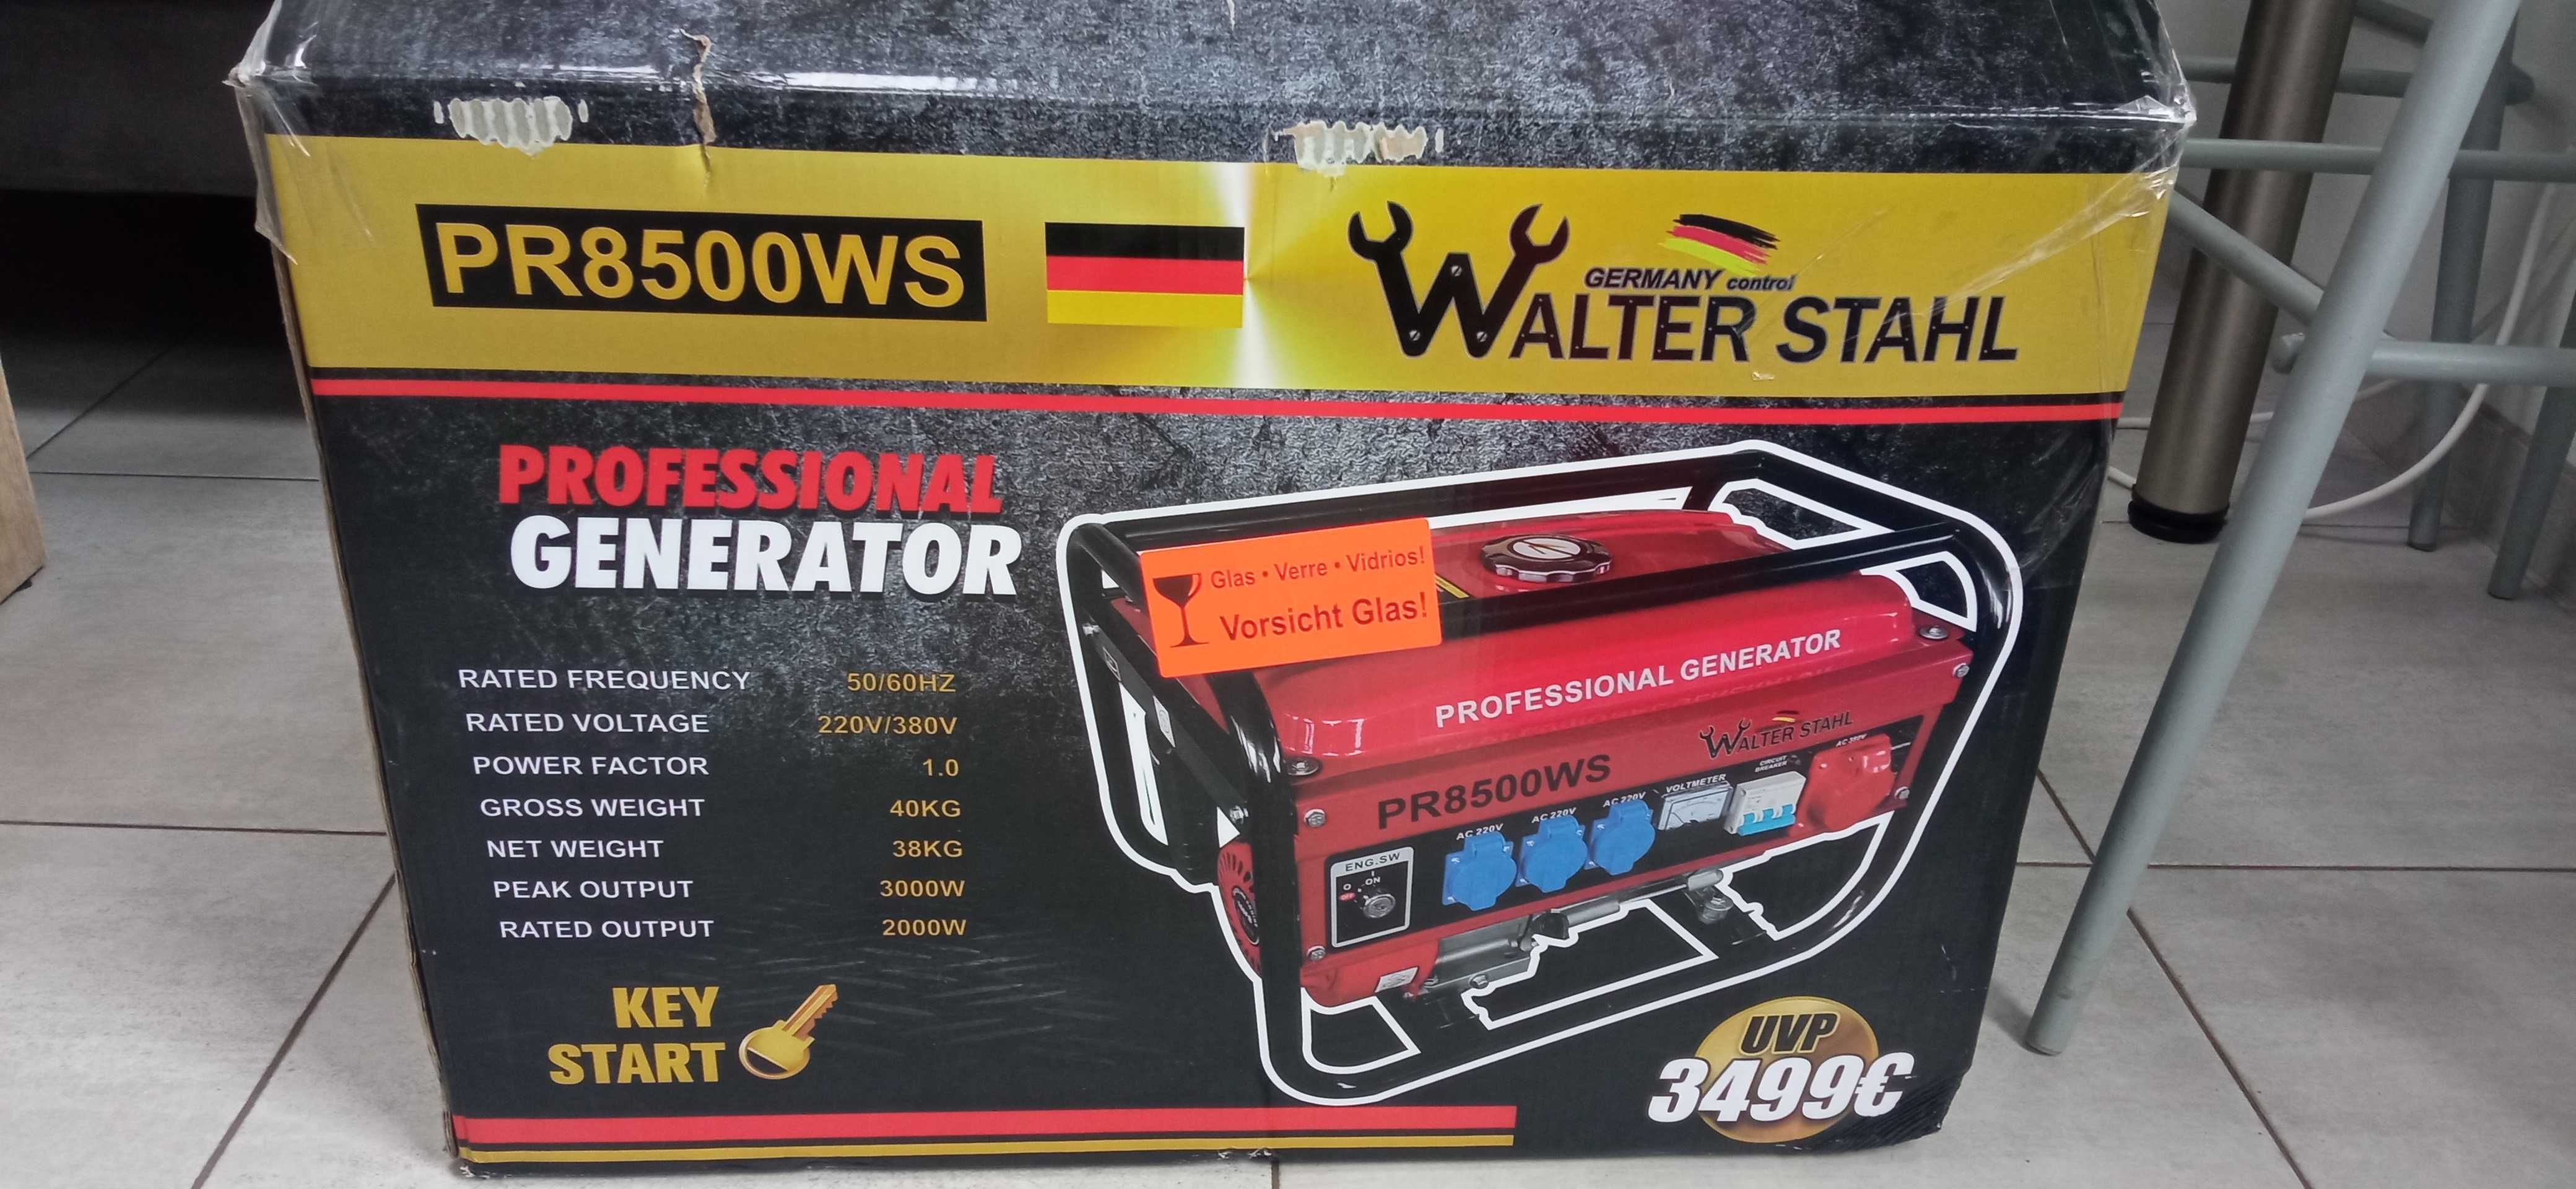 Генератор   Professional GENERATOR WALTER STAHL PR 8500 WS, Германия